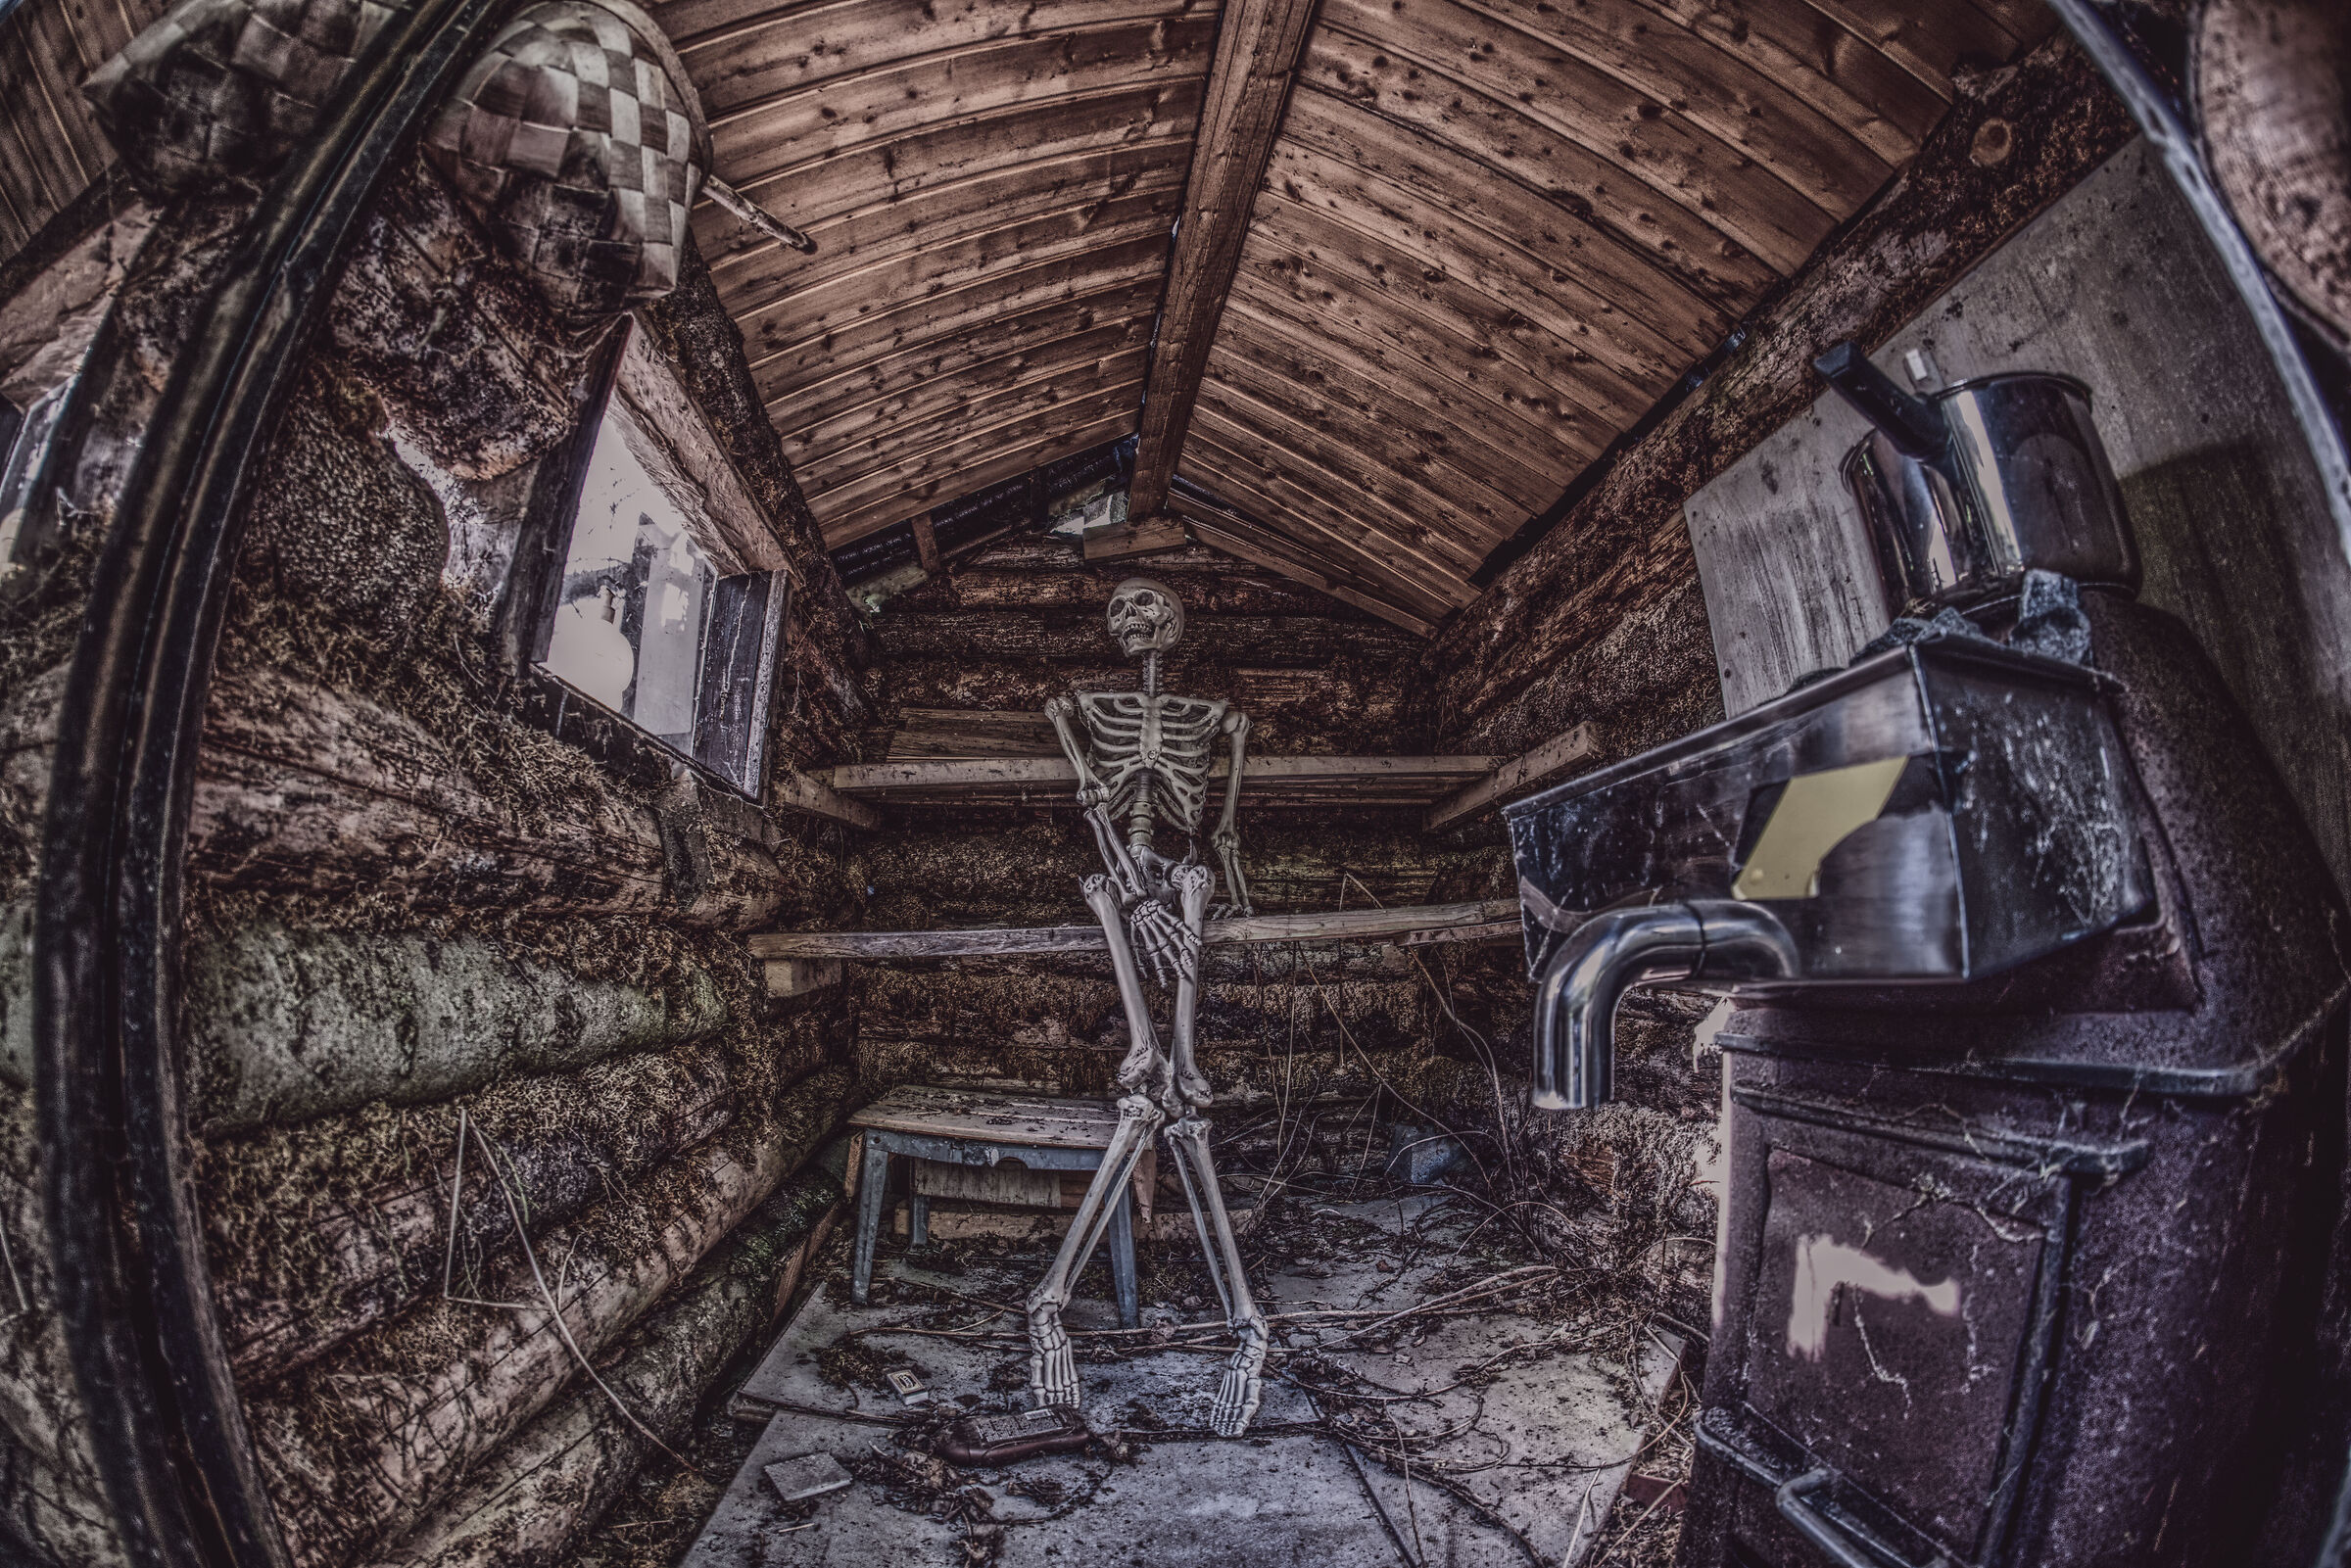 Skeleton needs some privacy in sauna...